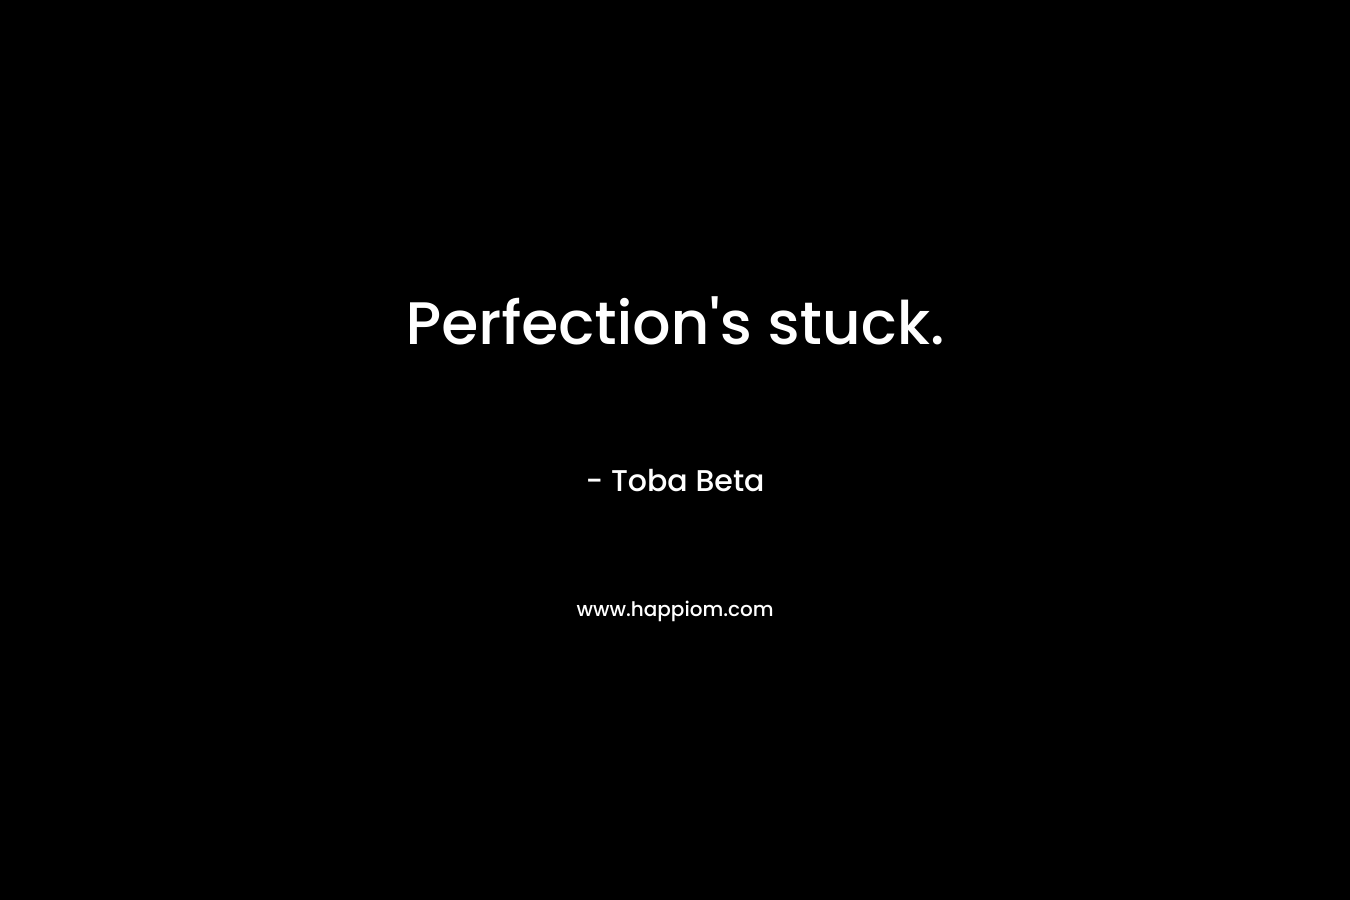 Perfection’s stuck. – Toba Beta